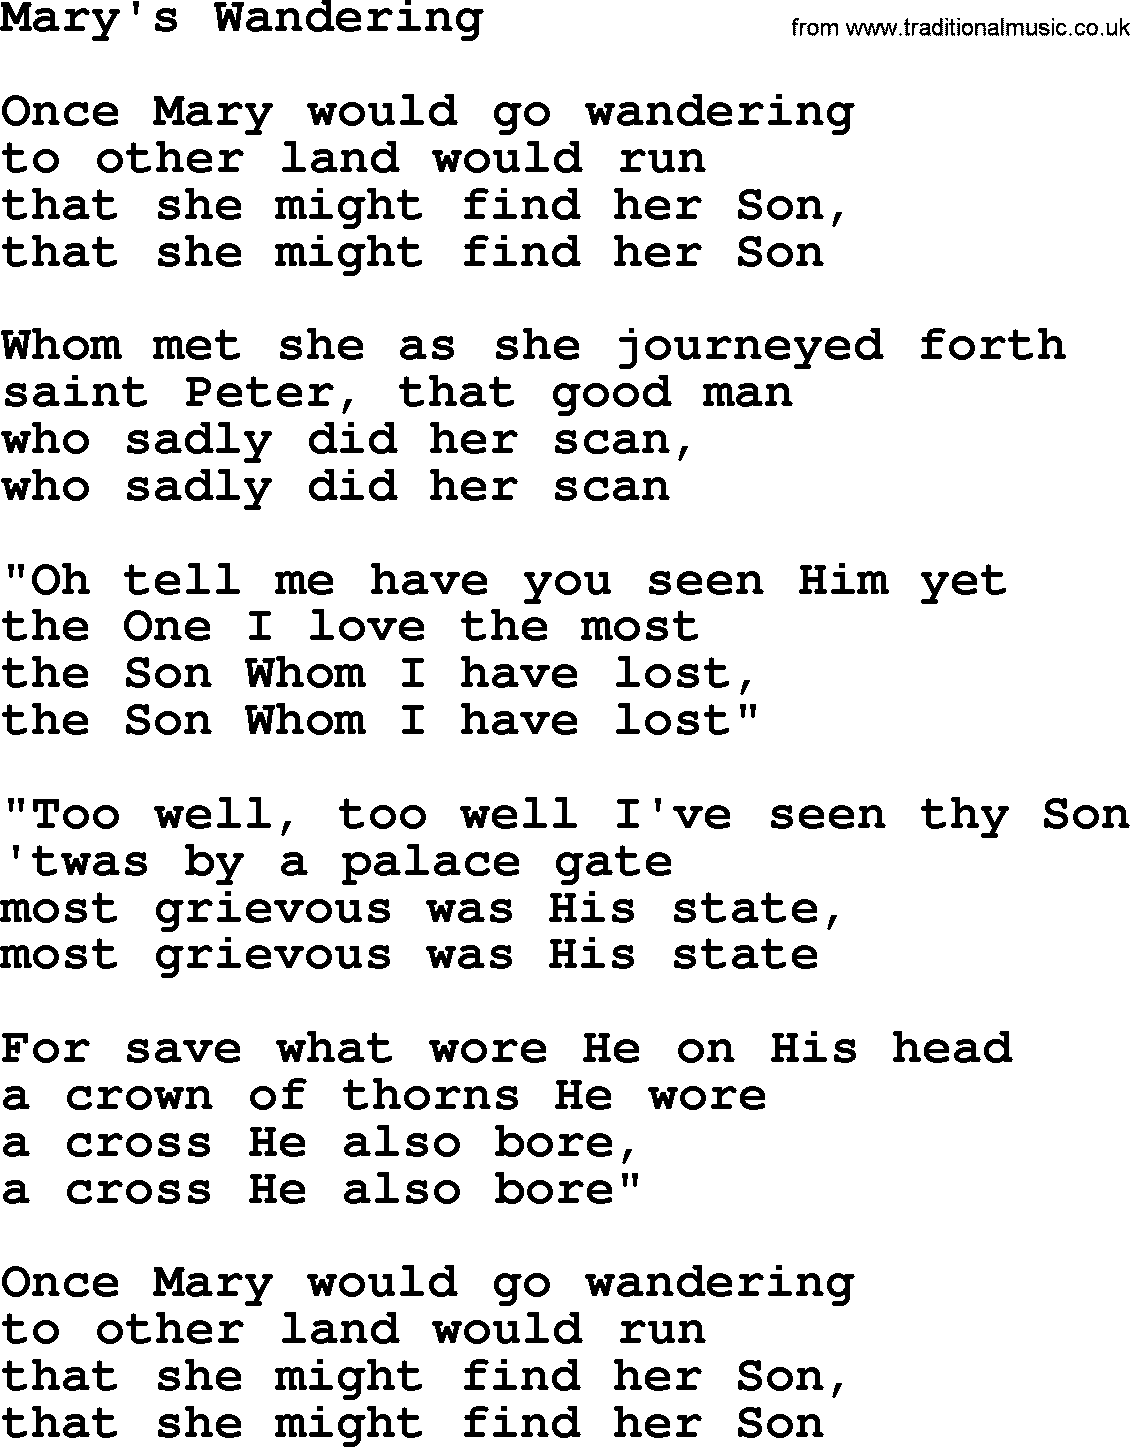 Joan Baez song Mary's Wandering, lyrics